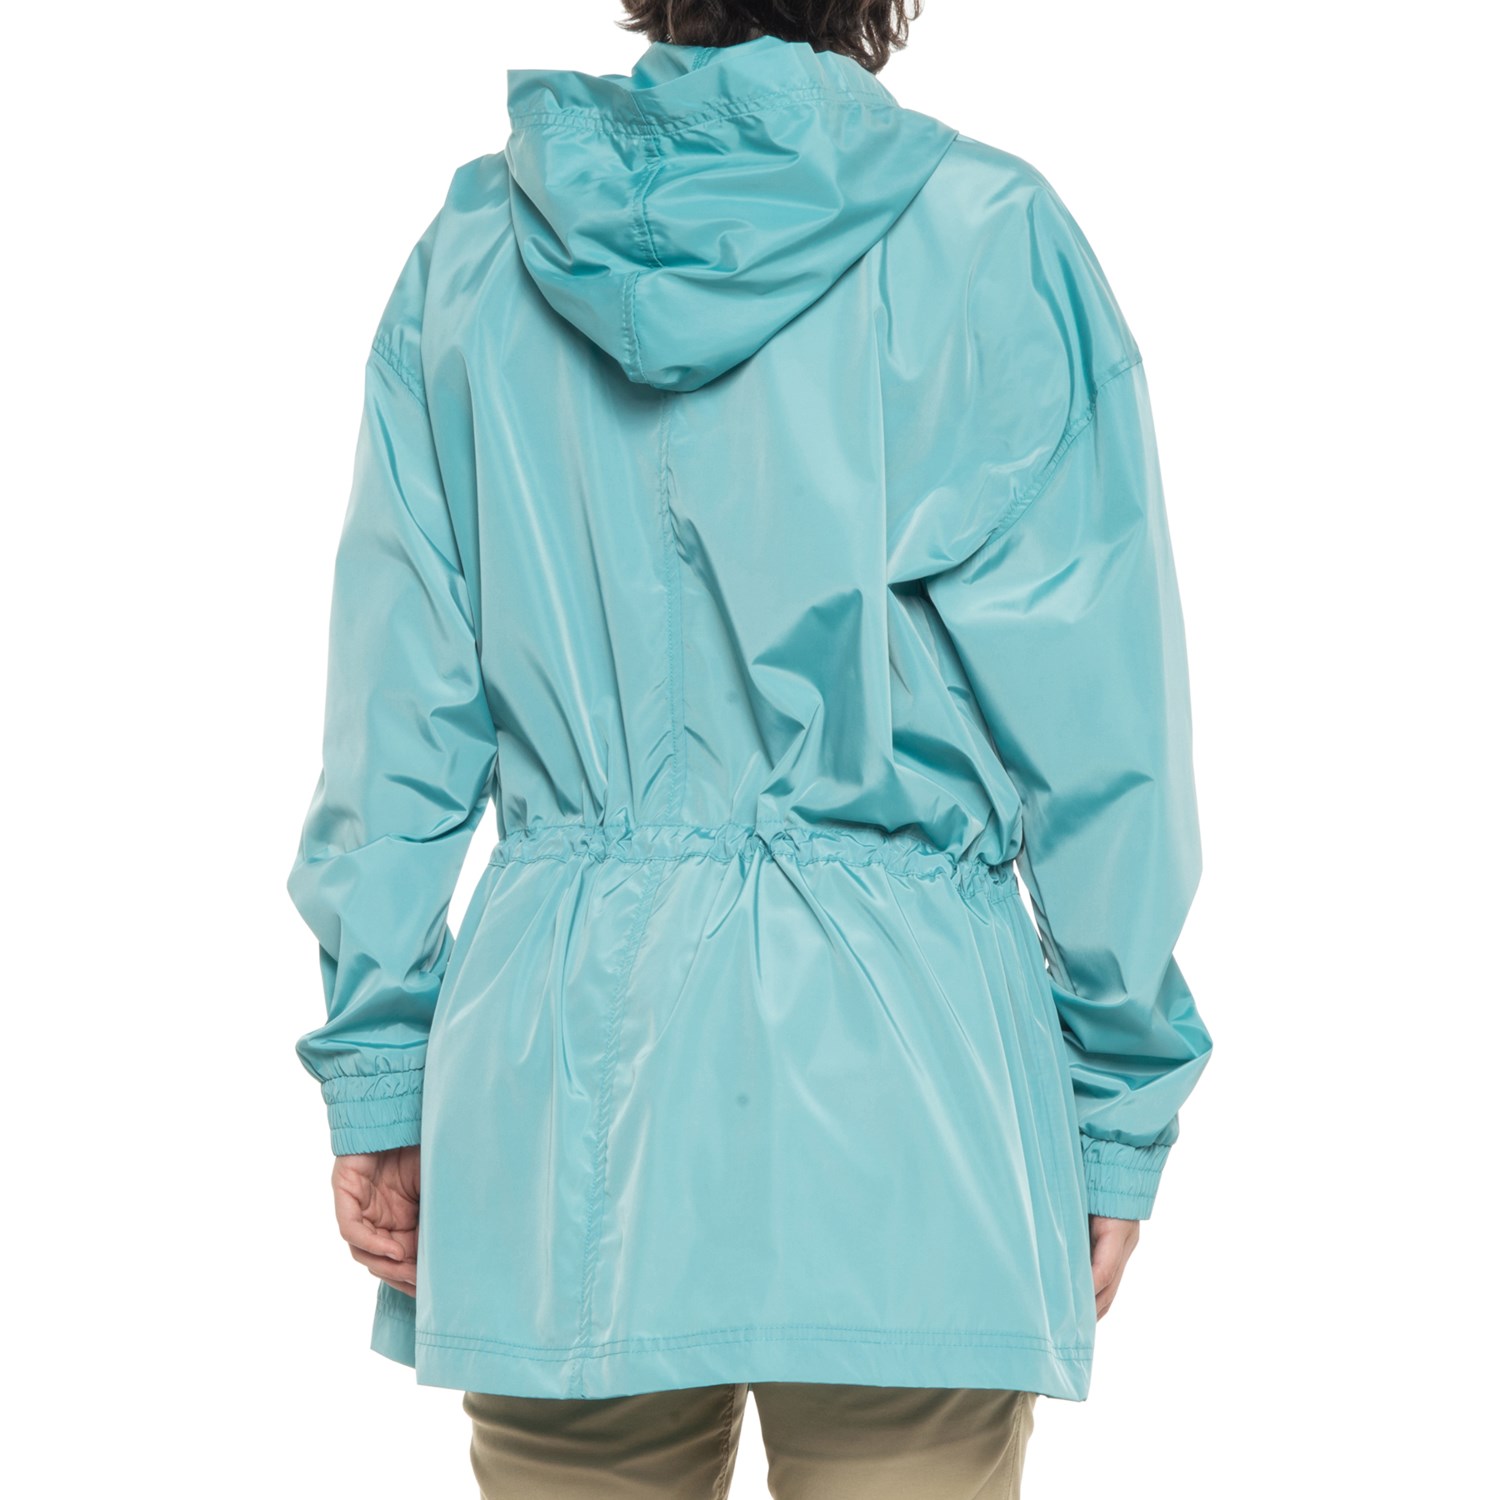 Apana Hooded Anorak Rain Jacket (For Women) - Save 45%